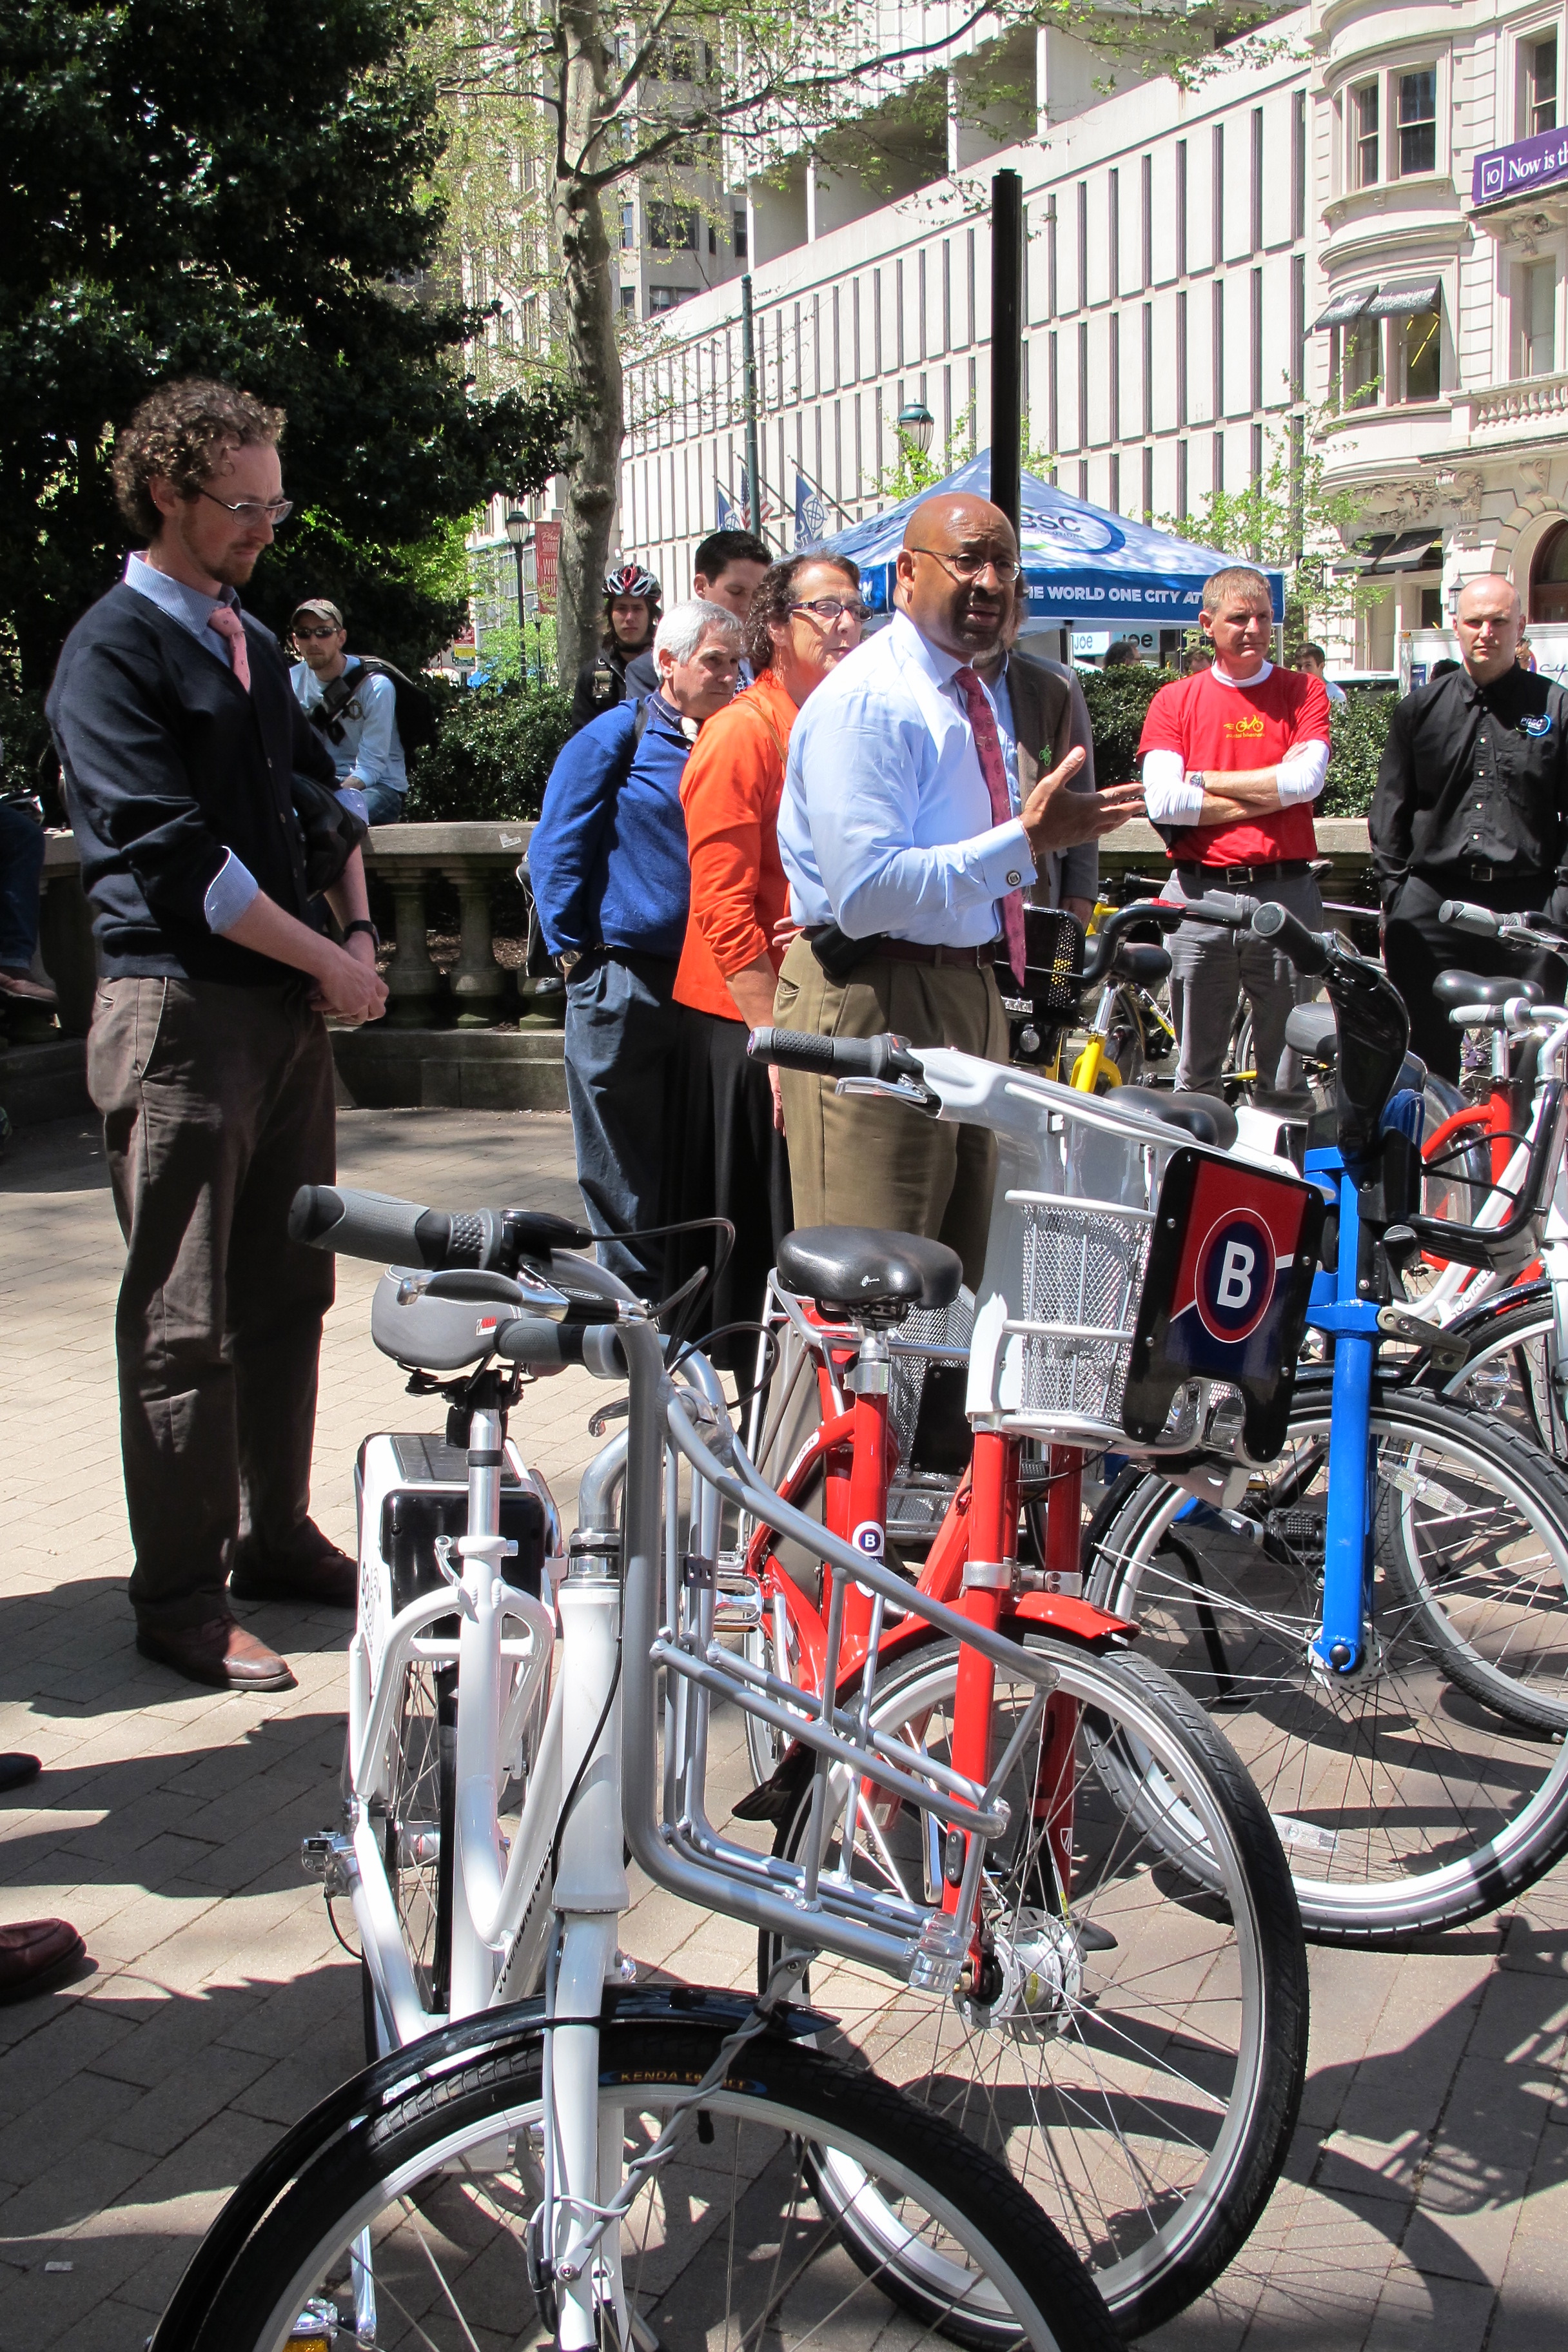 Mayor Nutter speaking at Tuesday's bike-share demonstration